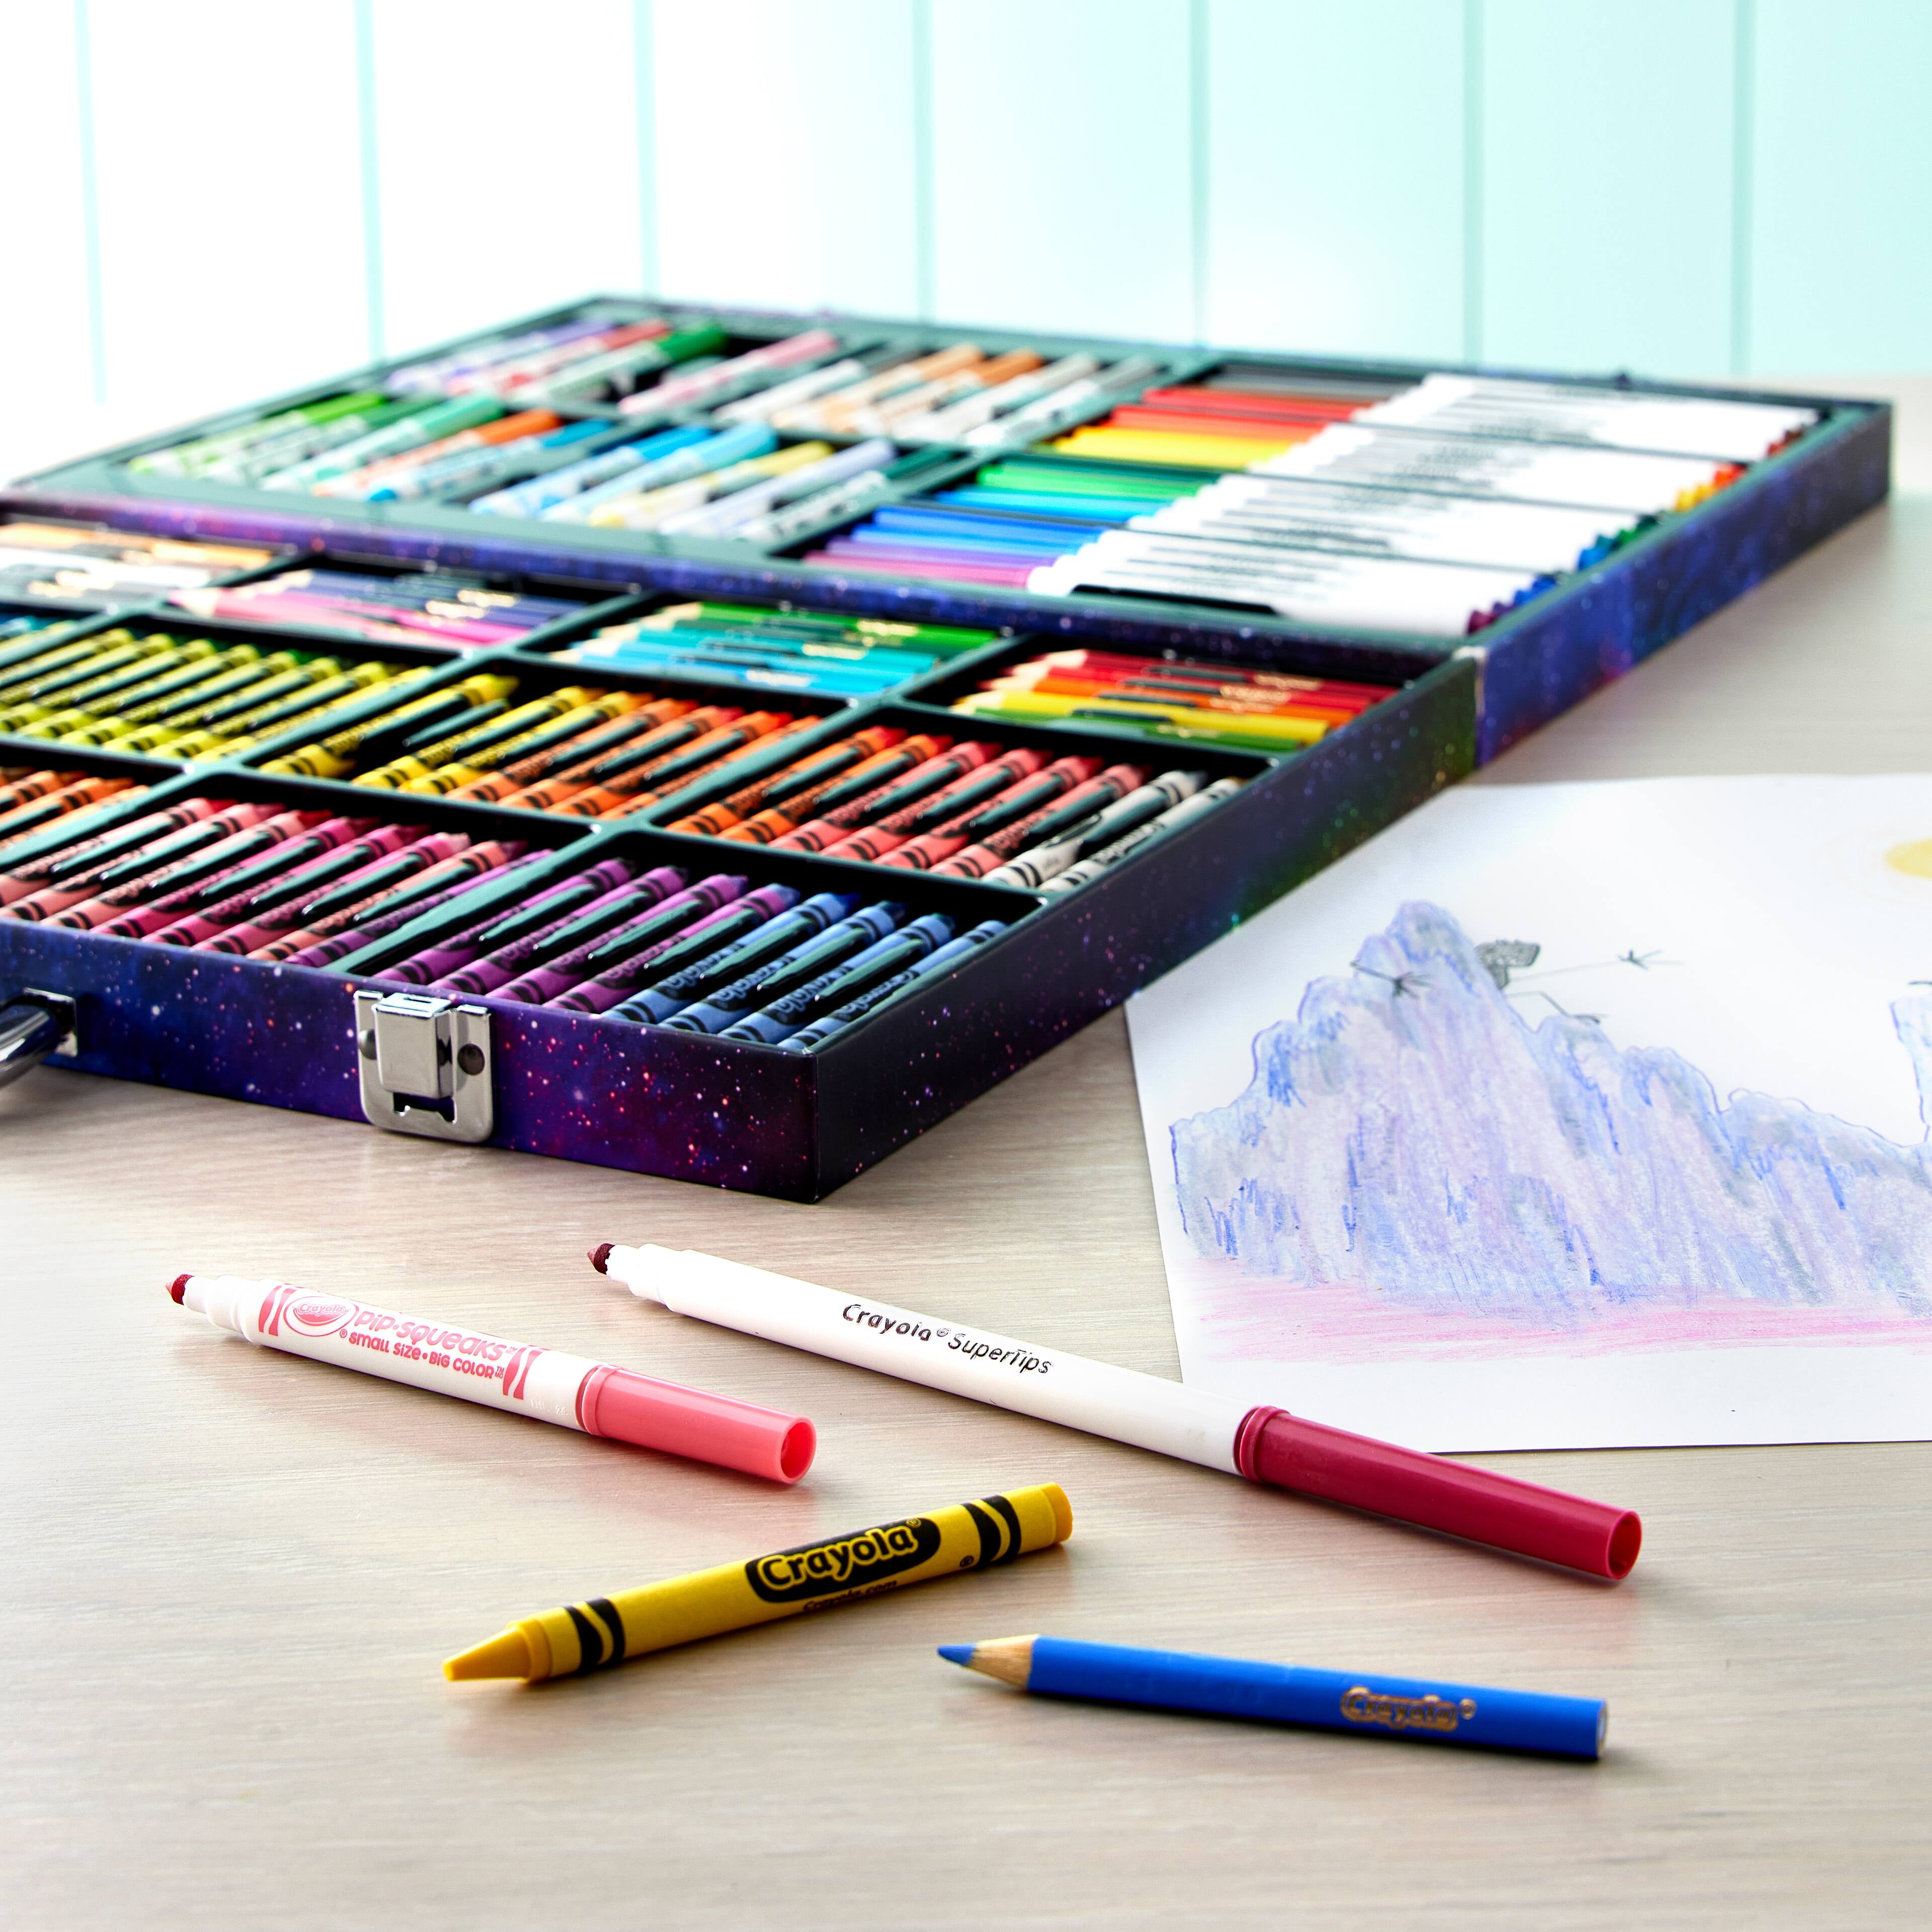 Clayola Crayola Drawing inspiration Art Case 04-2532 